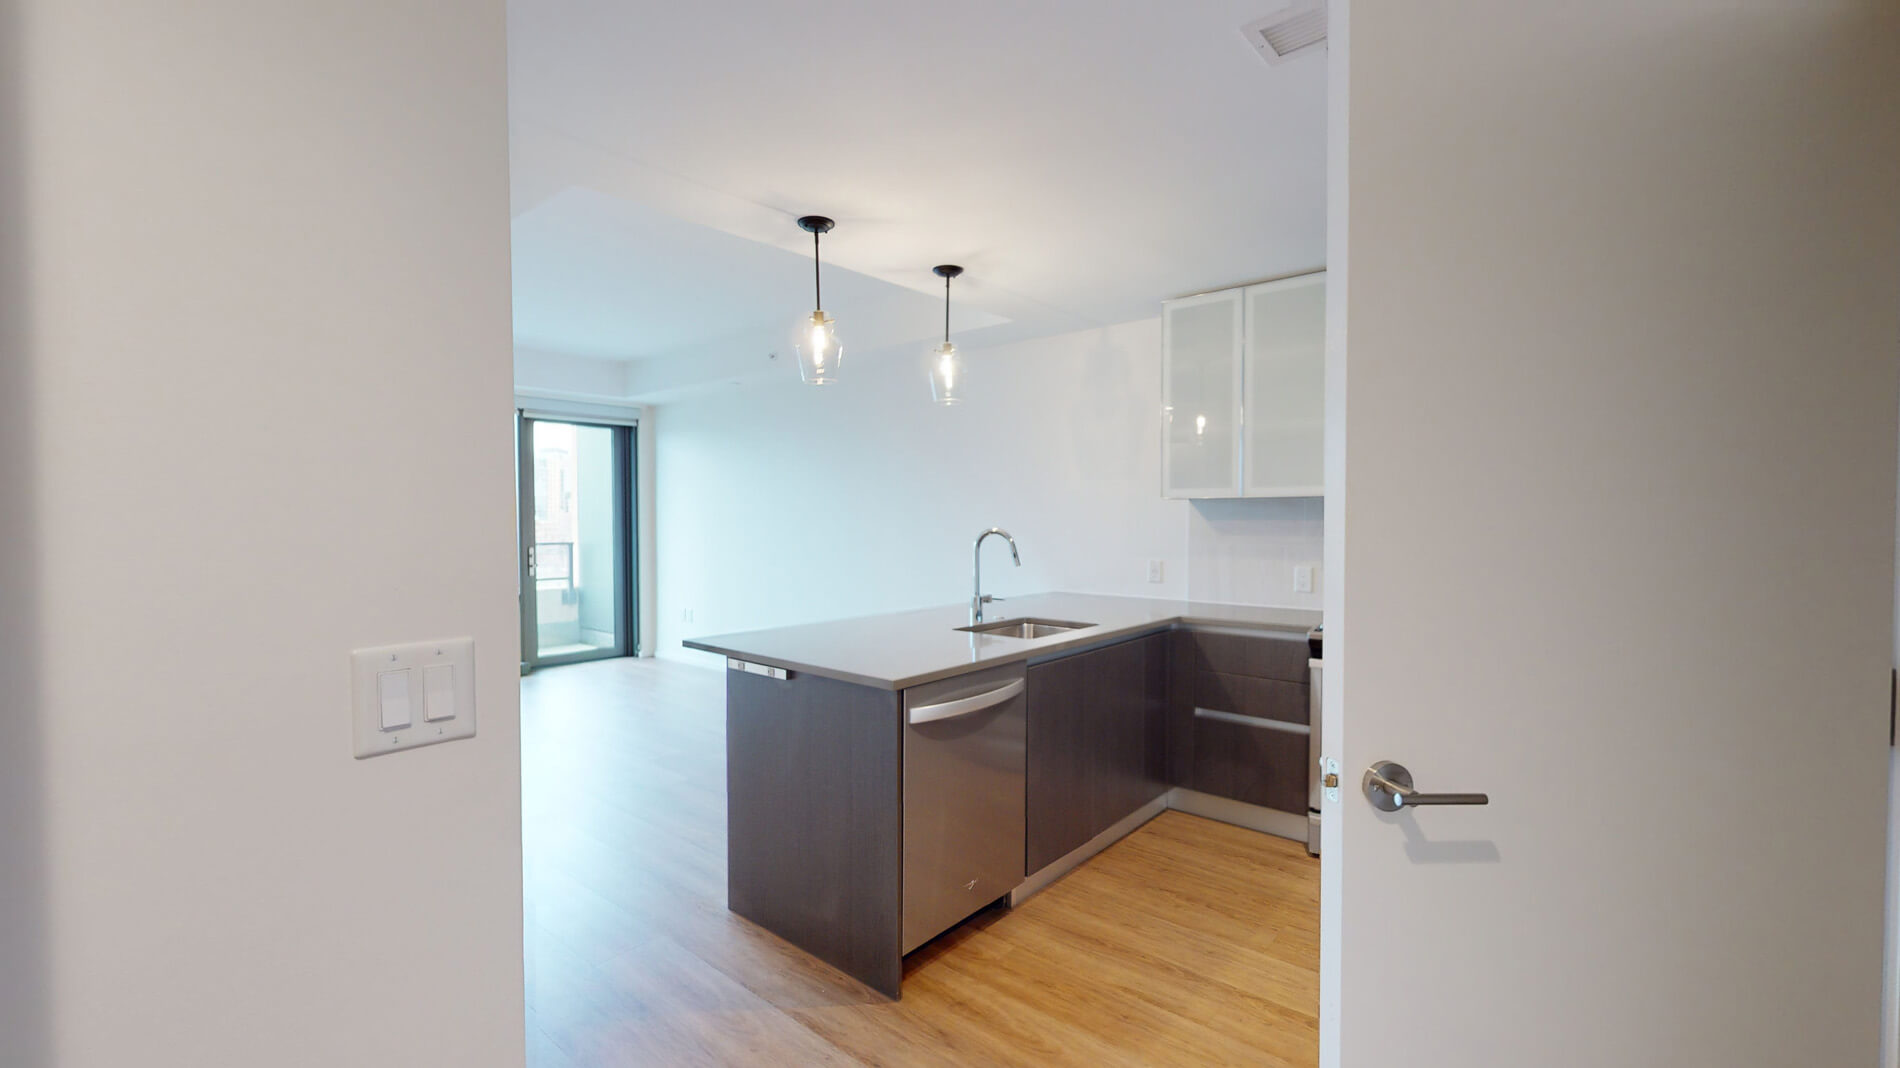 Photos of apartment on Camden St.,Boston MA 02118